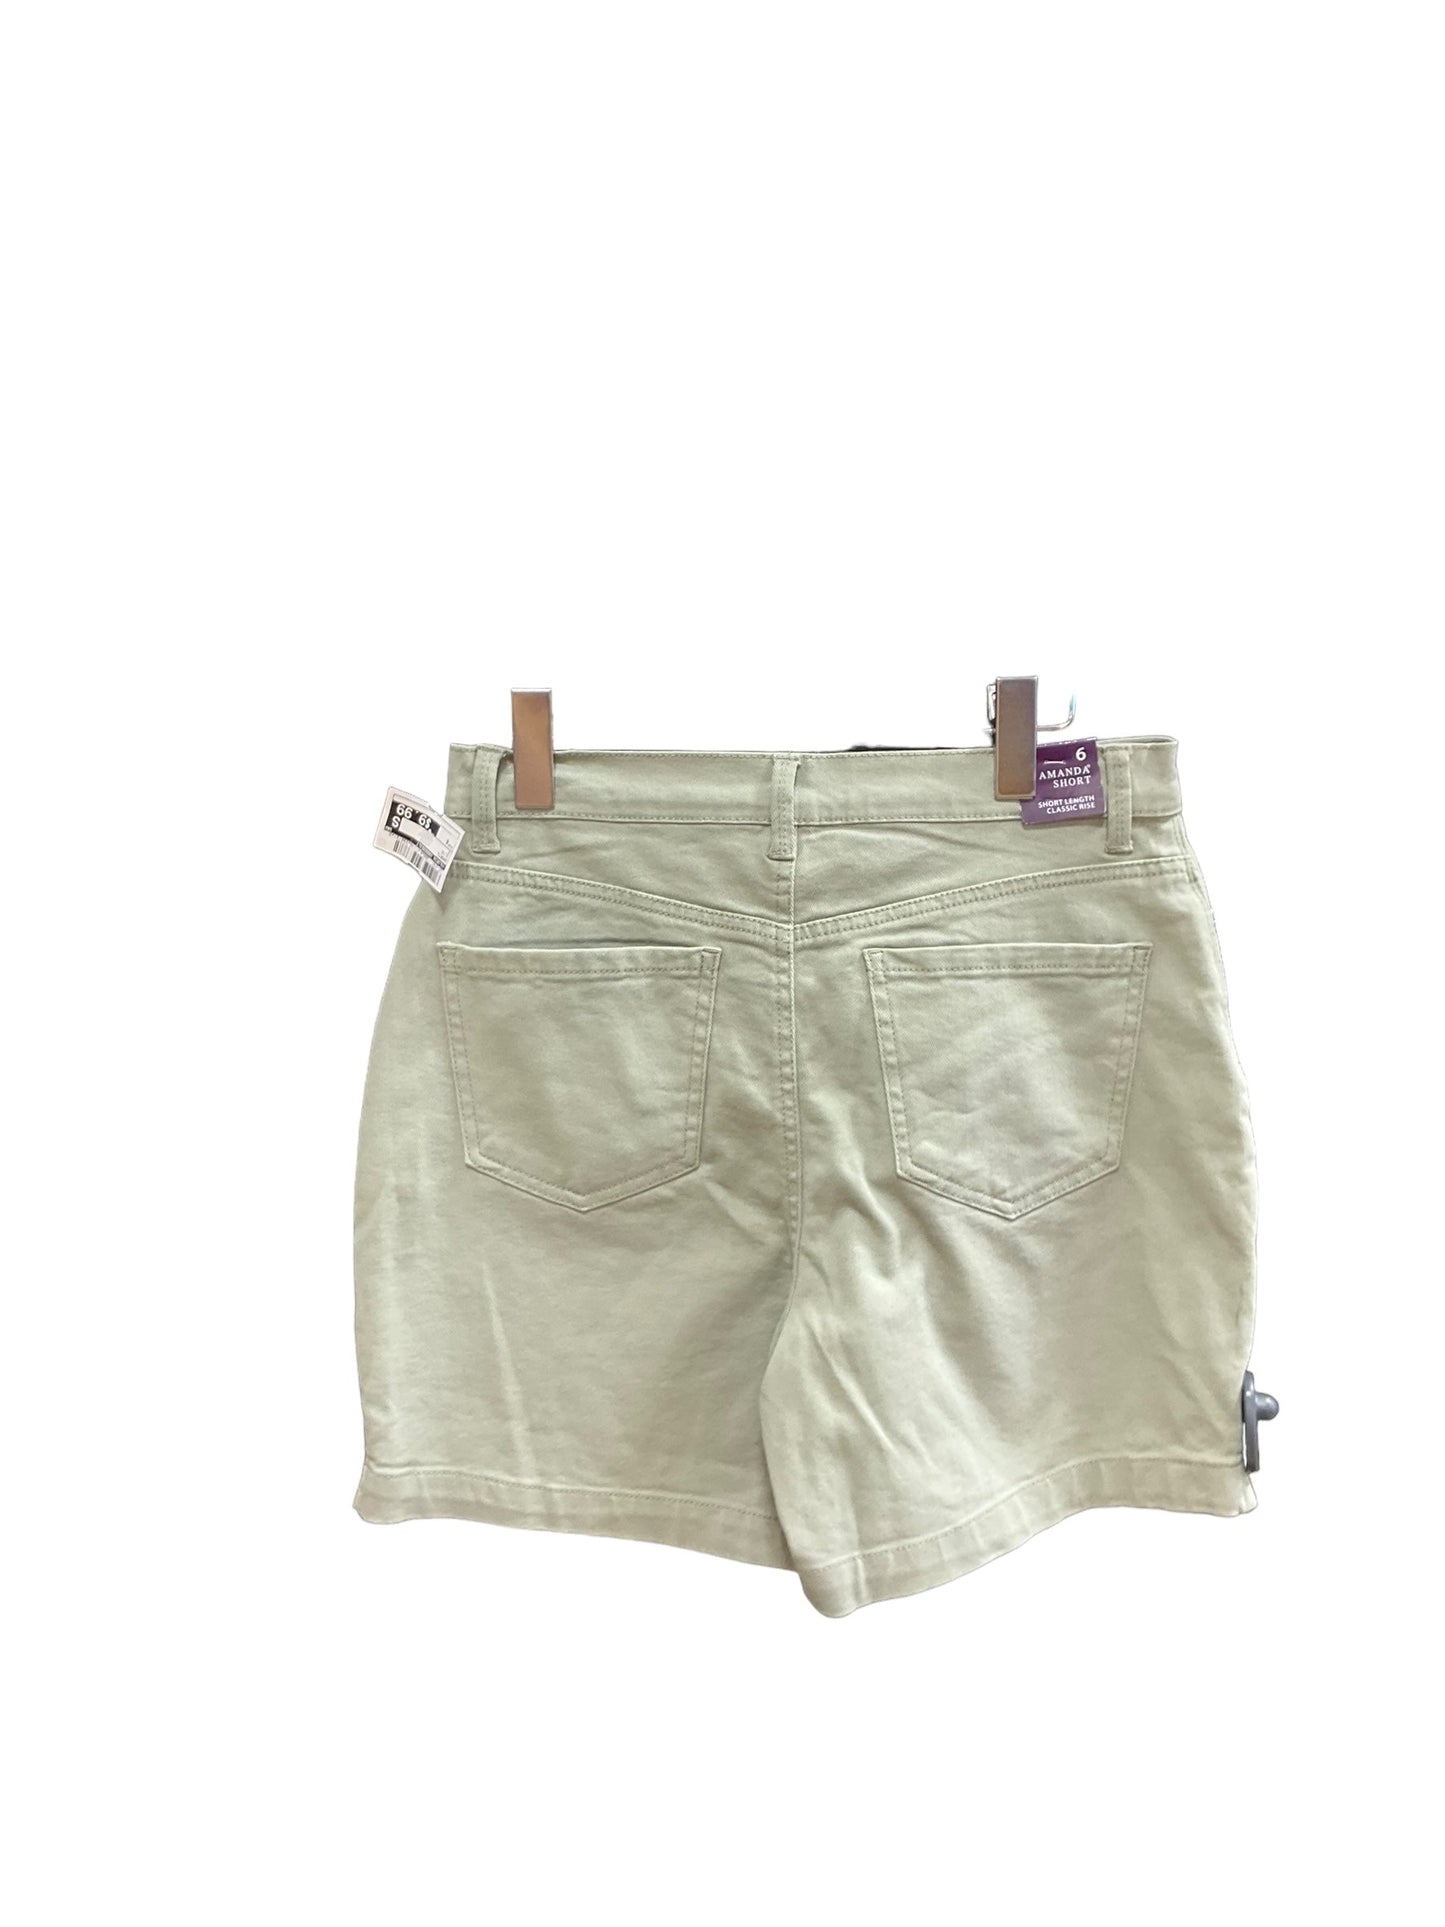 Olive Shorts Gloria Vanderbilt, Size 6